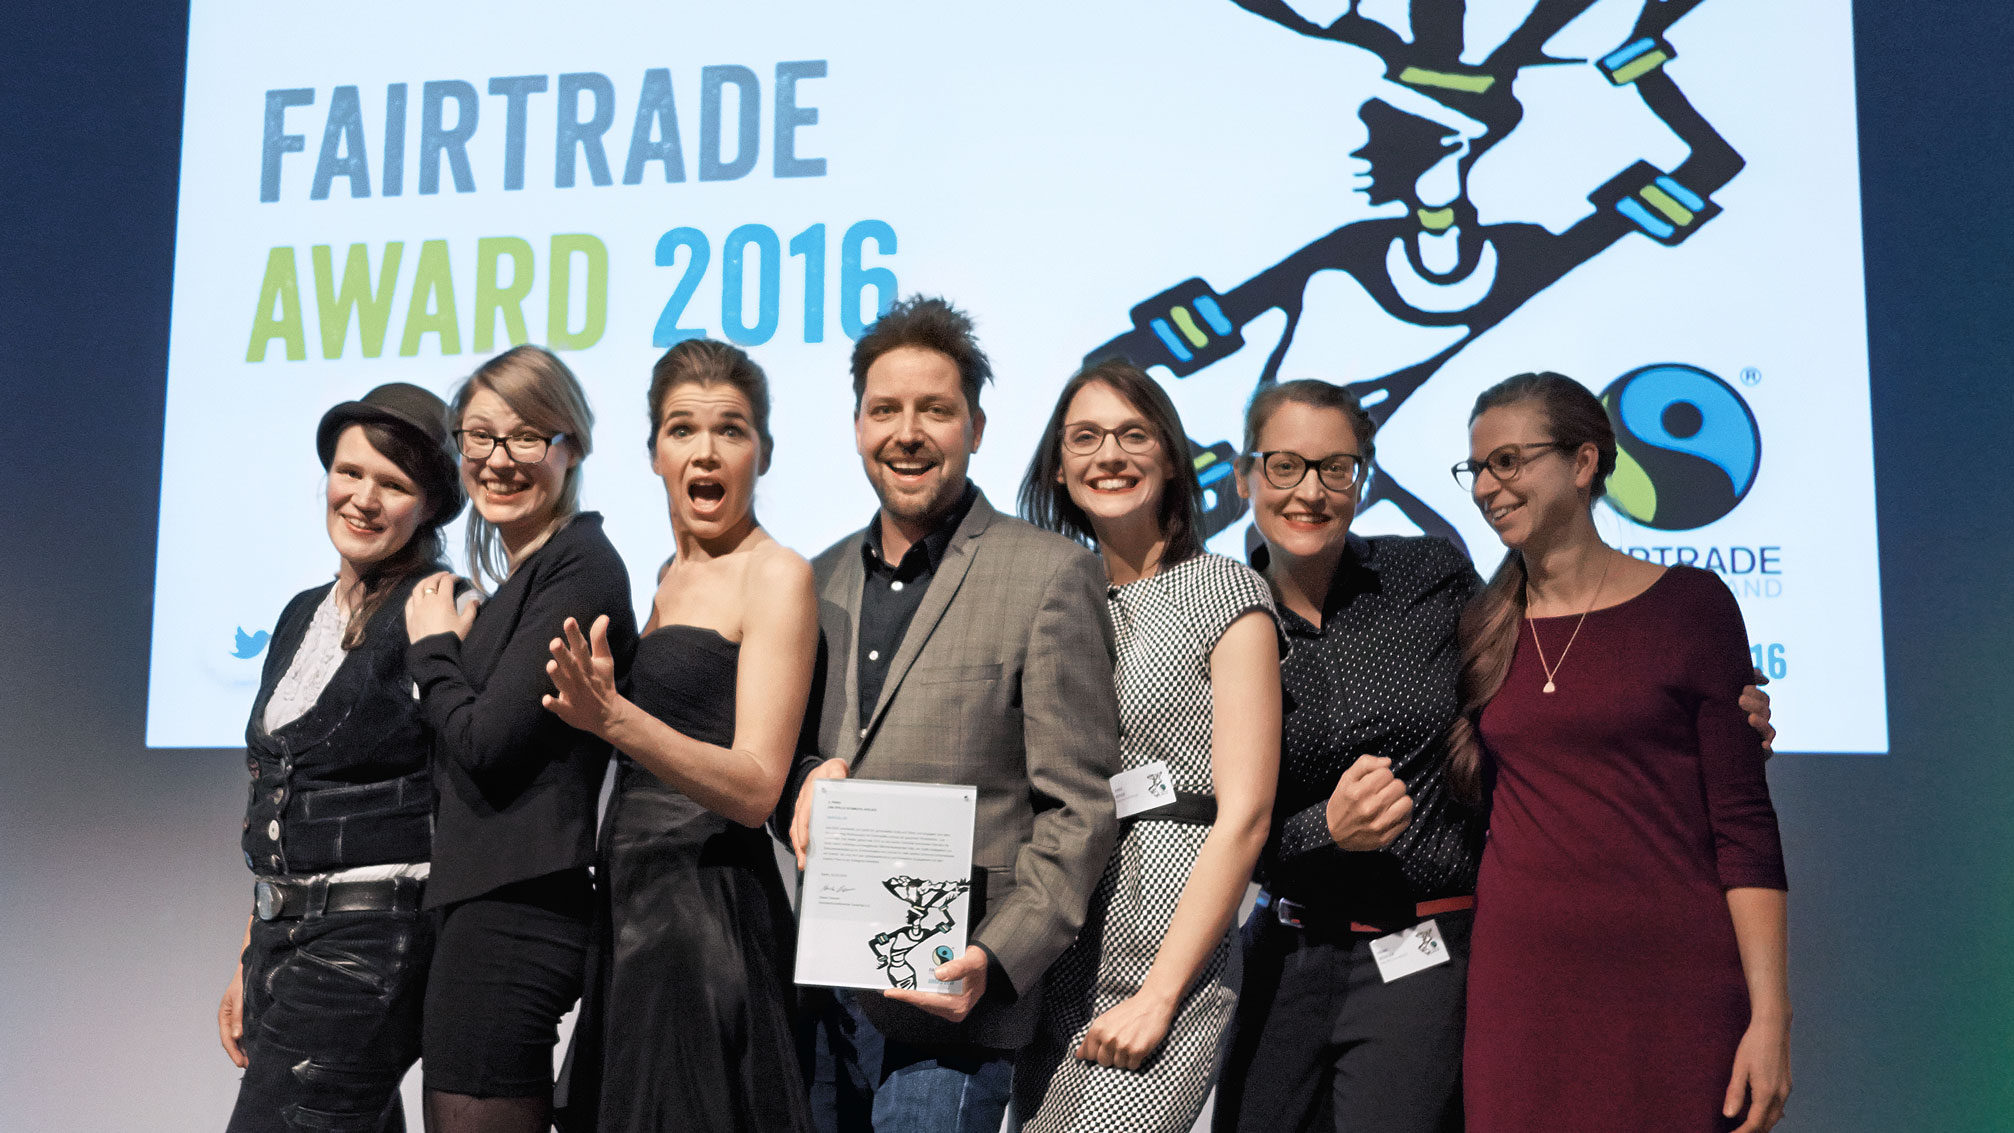 Team Jan Spille Schmuck bei Preisverleihung Fairtrade Award mit Anke Engelke